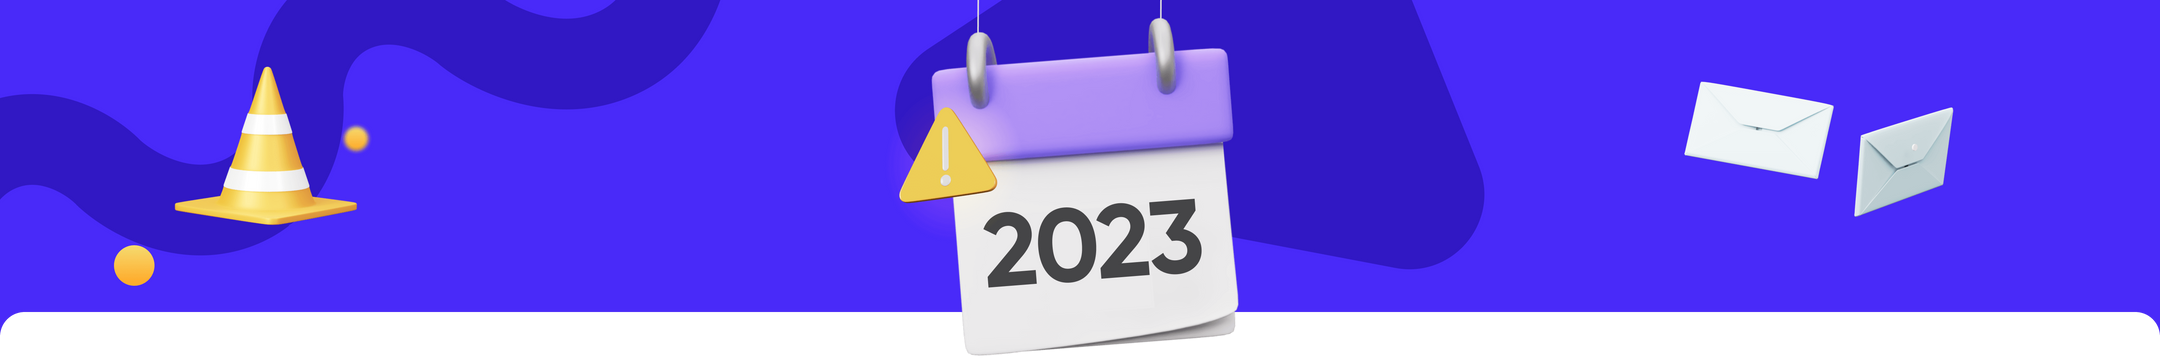 Steuererklärung 2023 Frist: Bis wann musst du abgeben?